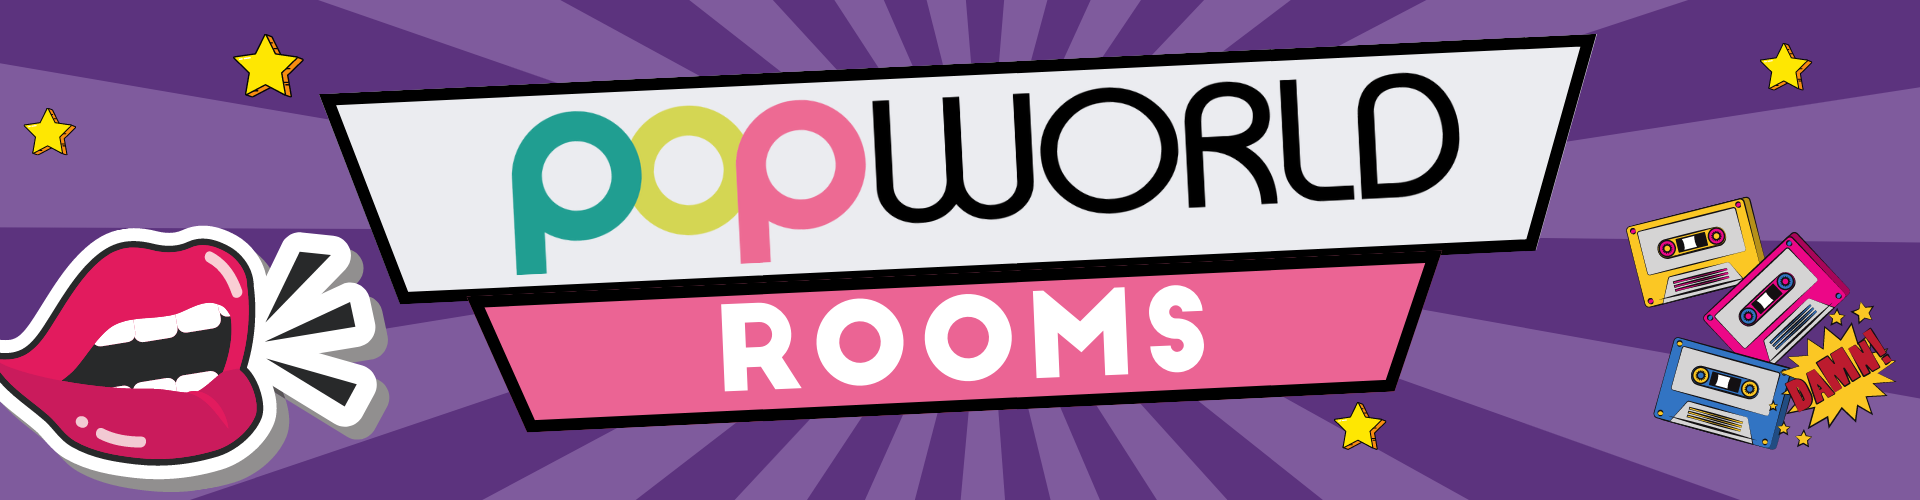 Popworld Rooms